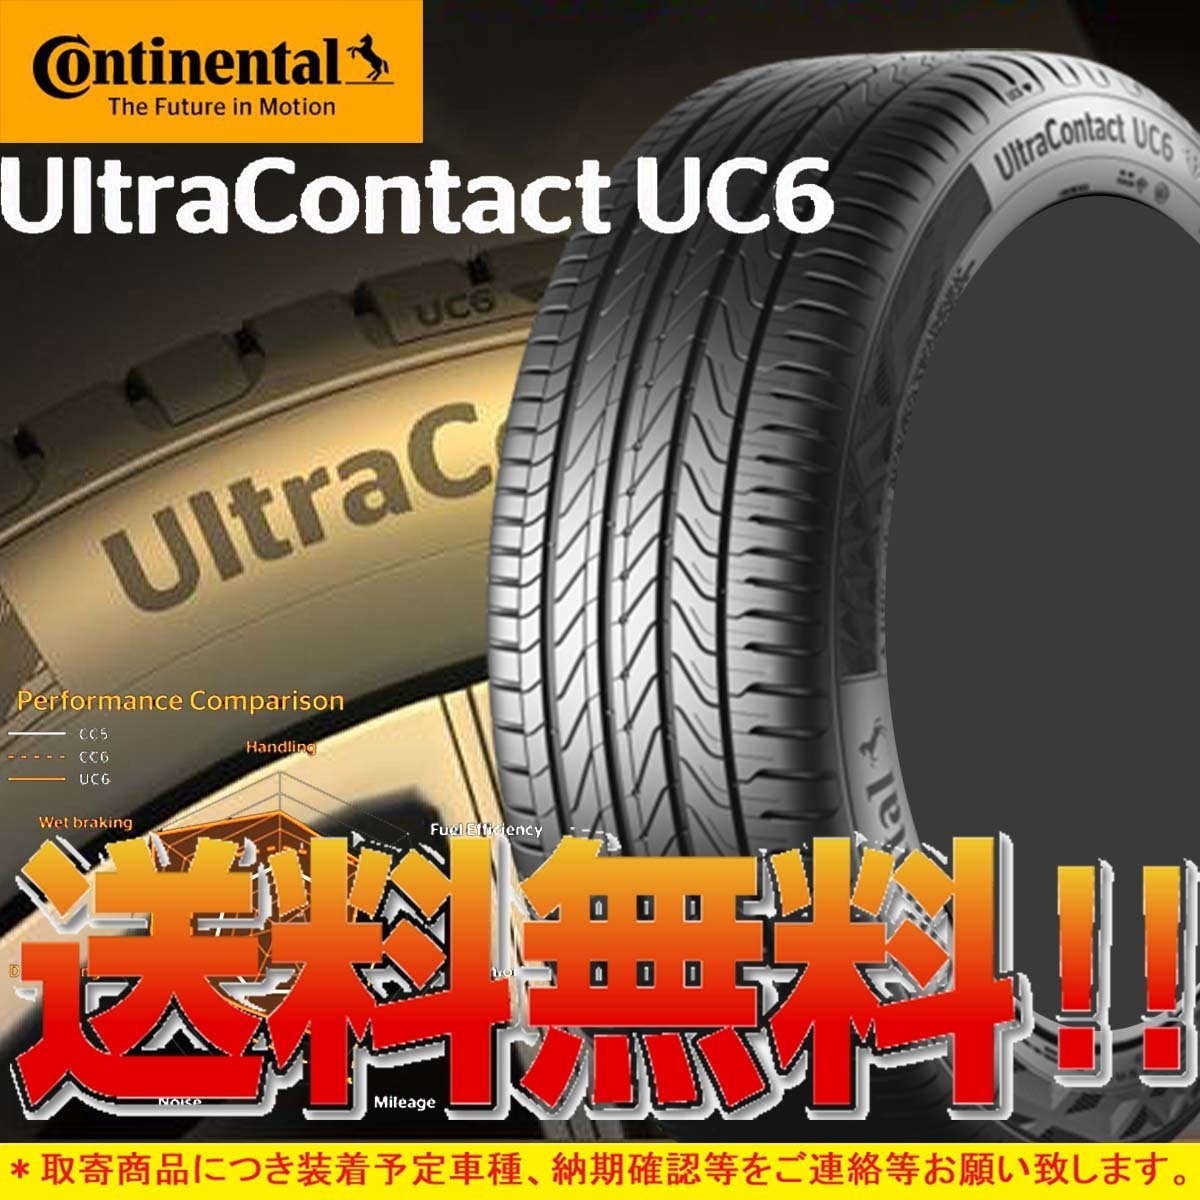 送料無料 新品 Continental UltraContact UC6 225/55-16 225/55R16 95W 1本 RX-8 BENZ Cclass W205 Eclass W211 AUDI TT その他